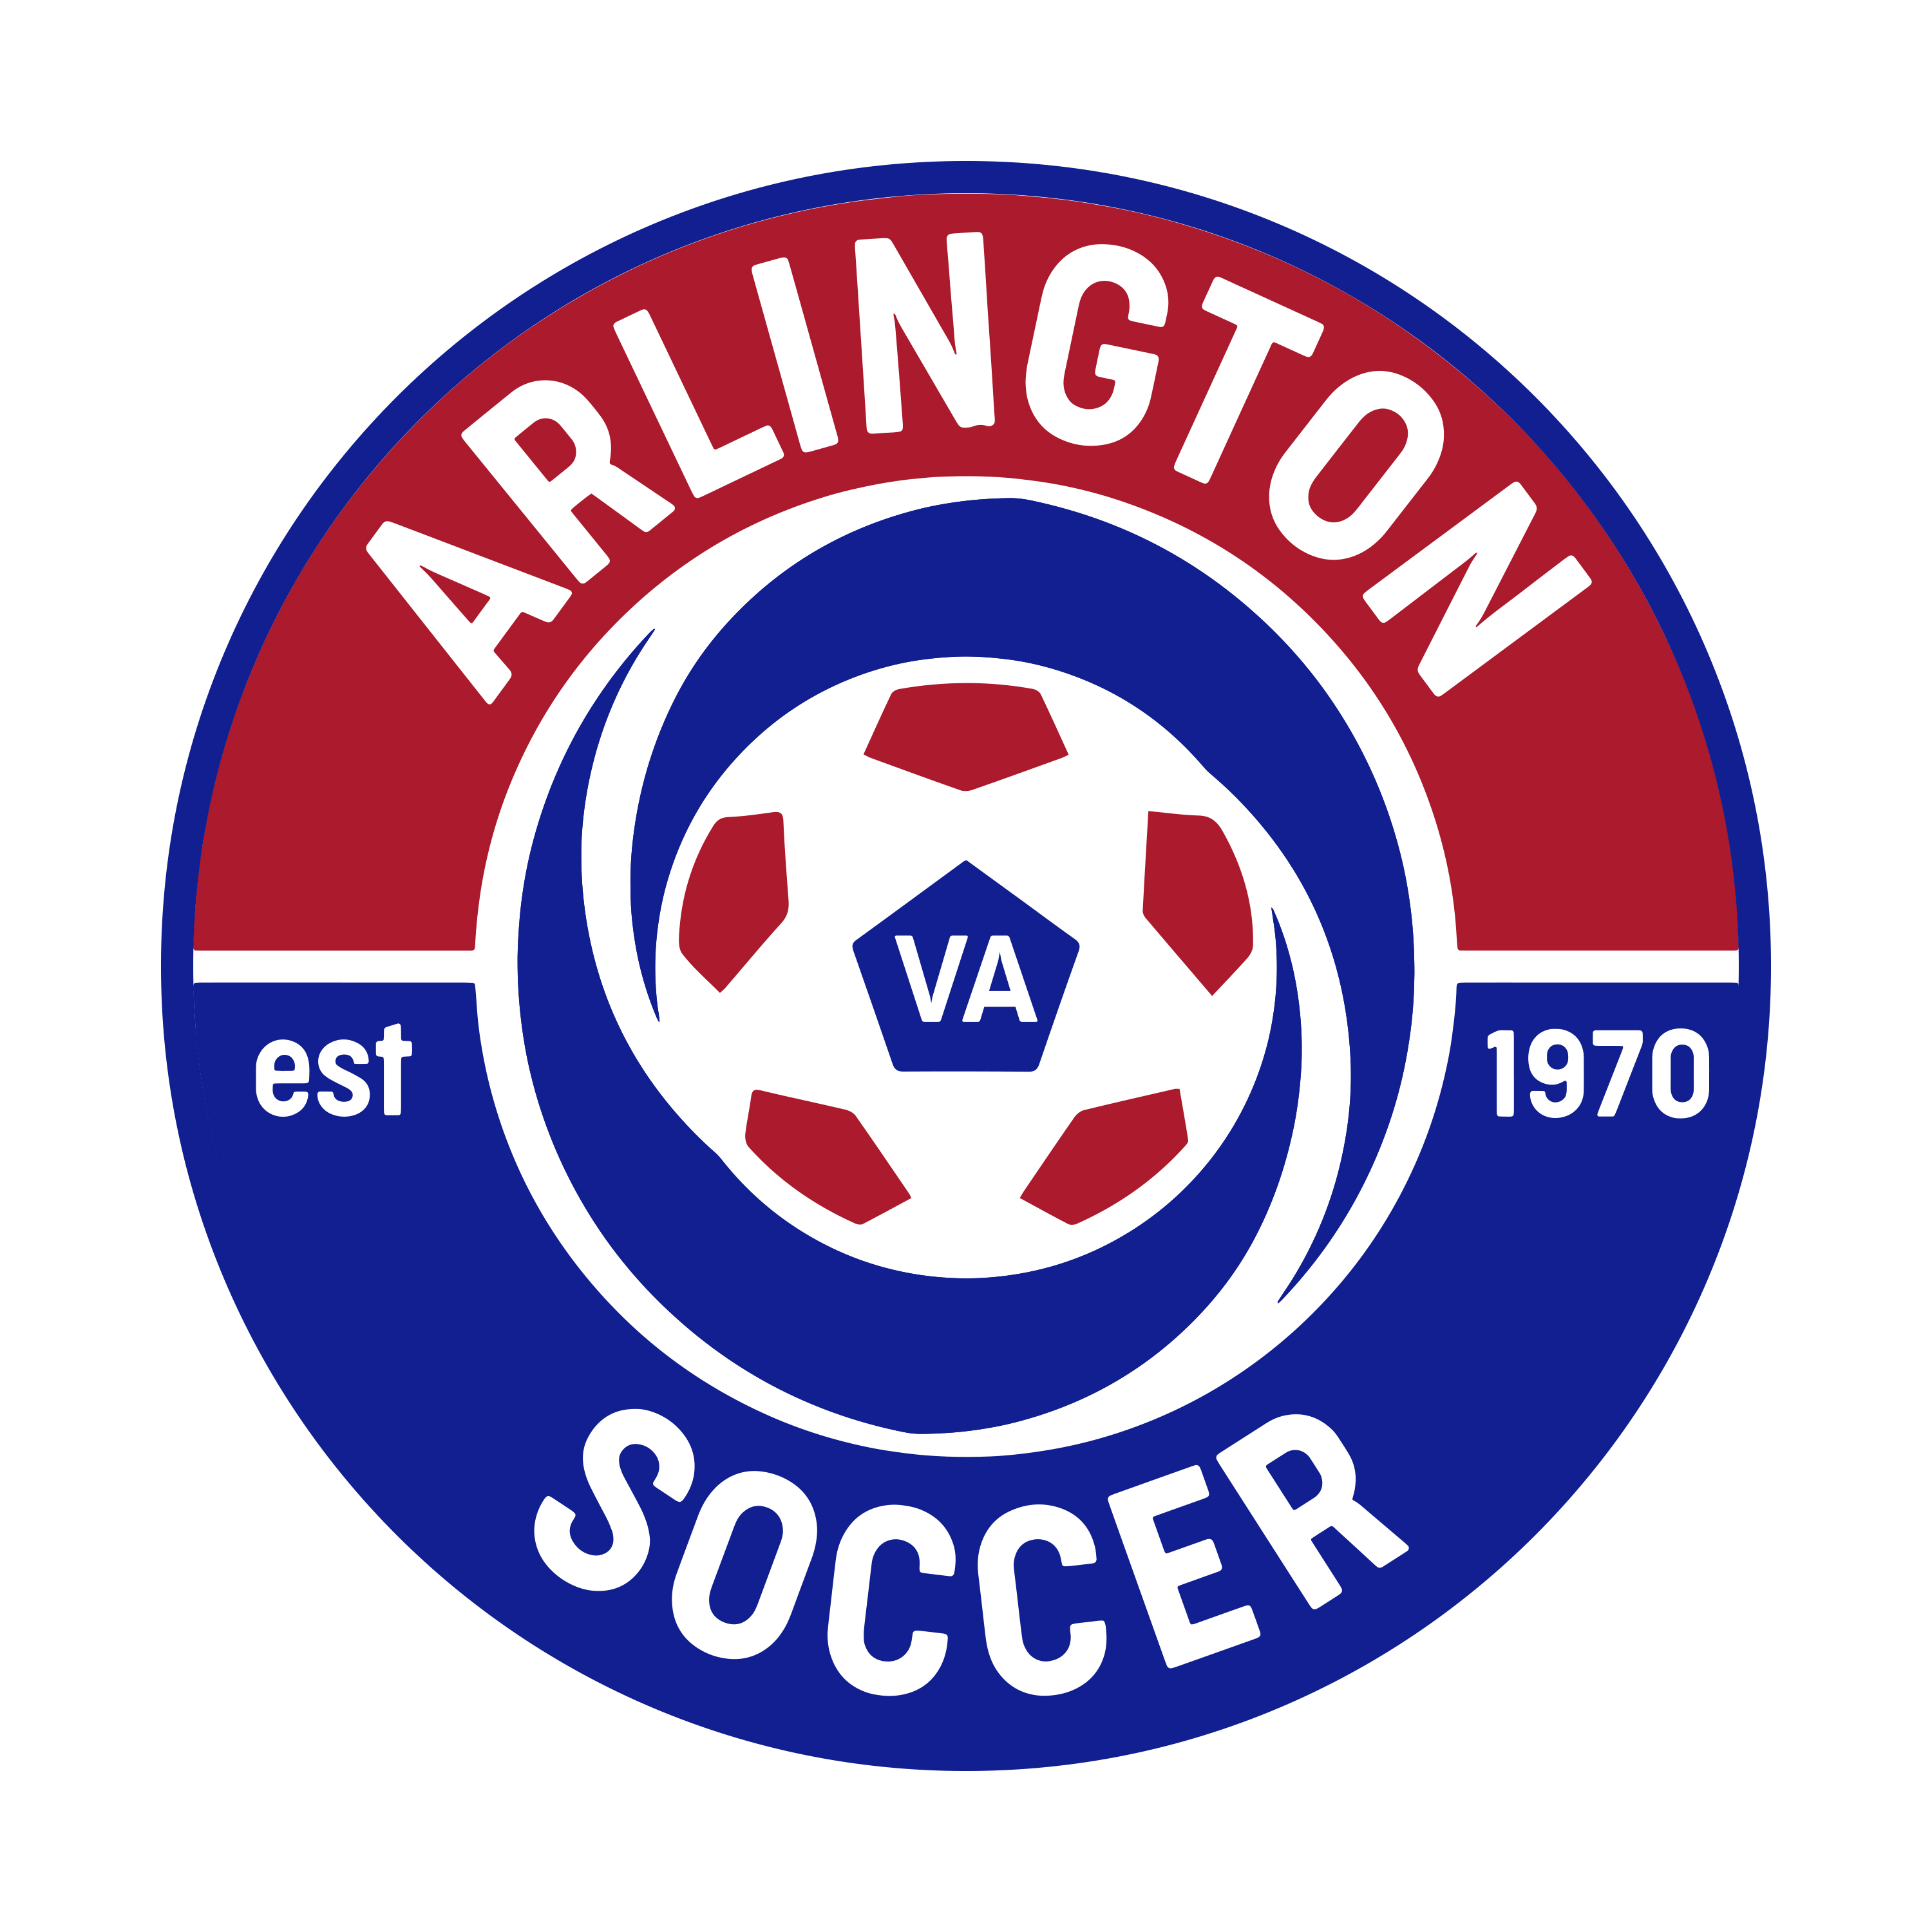 arlington soccer association travel coaches